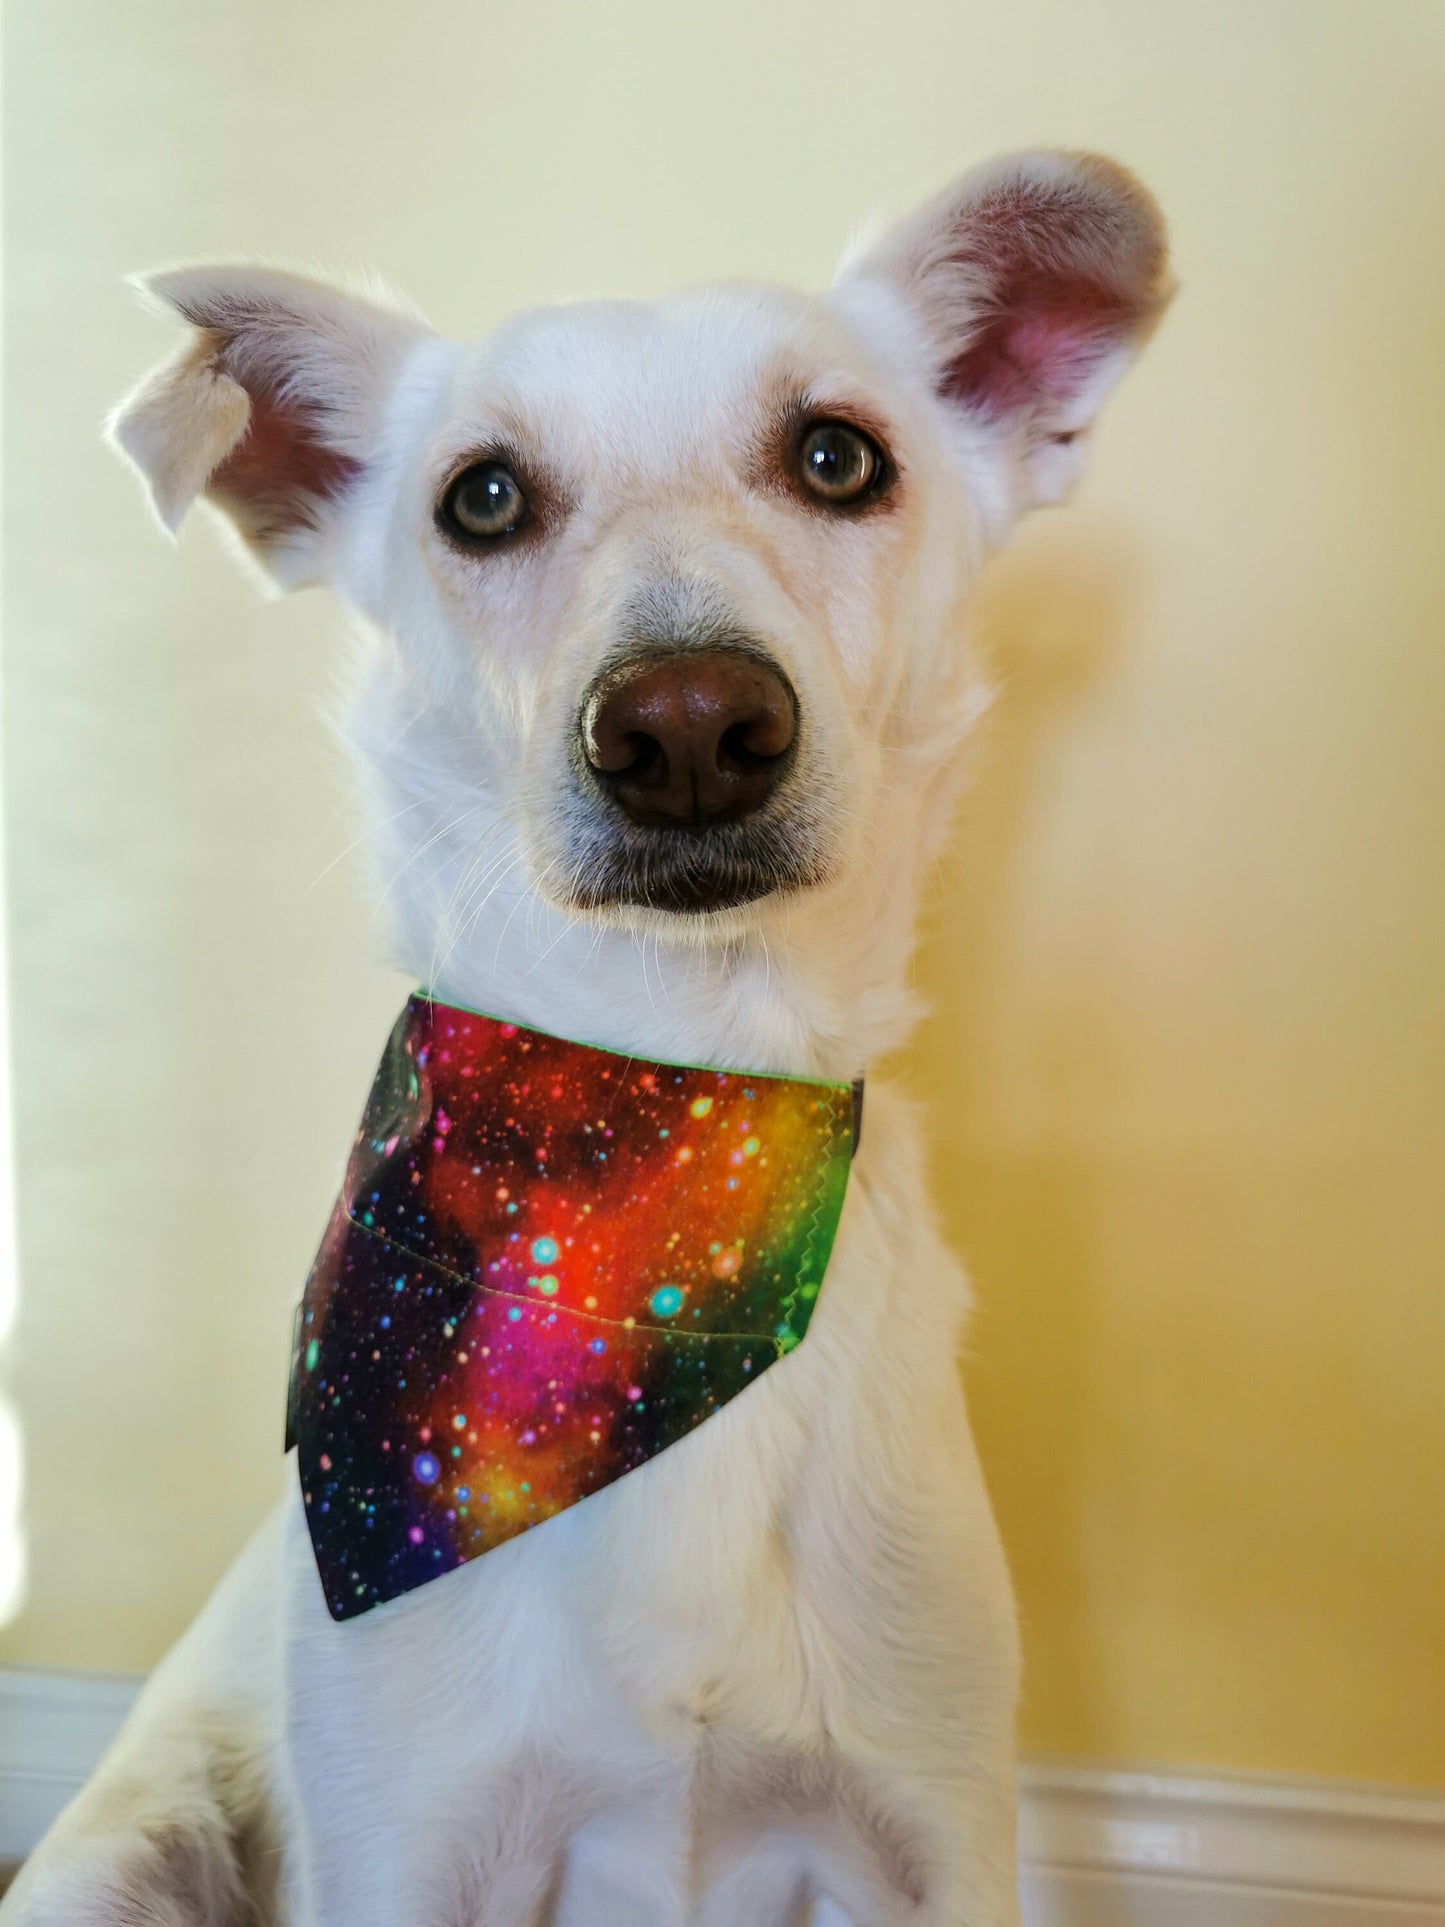 Colourful Galaxy Print Dog/Cat Slip On Bandana